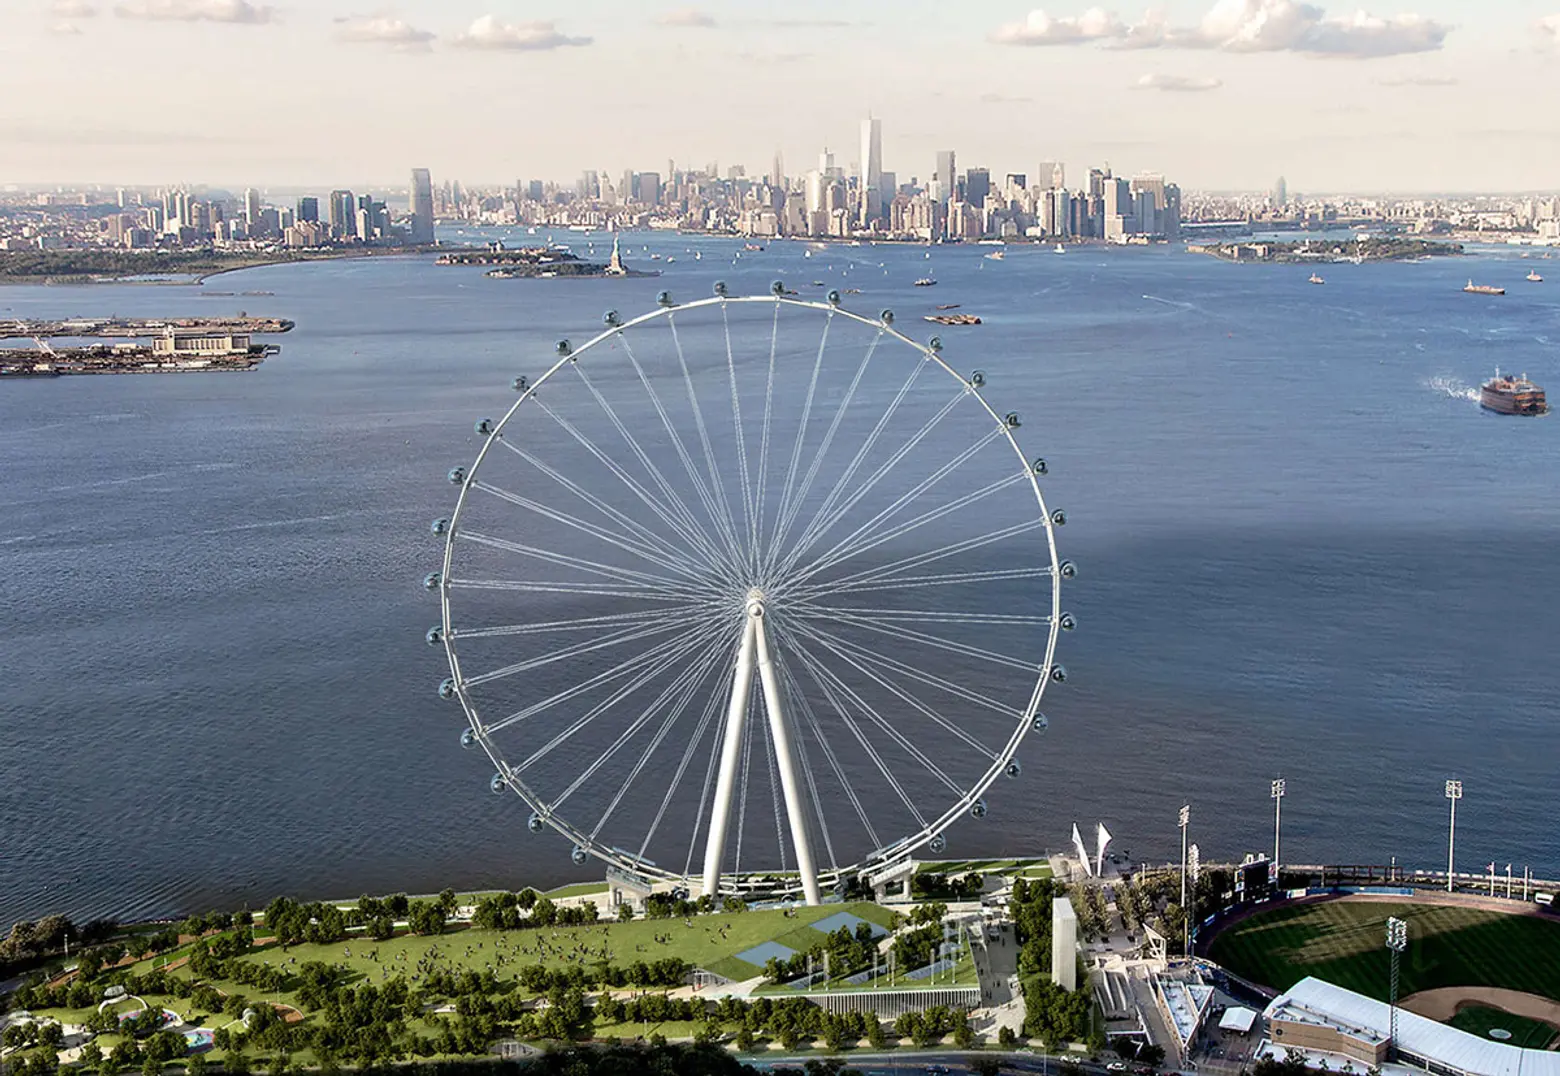 The City Breaks Ground on New York’s 630-Foot Ferris Wheel Tomorrow!